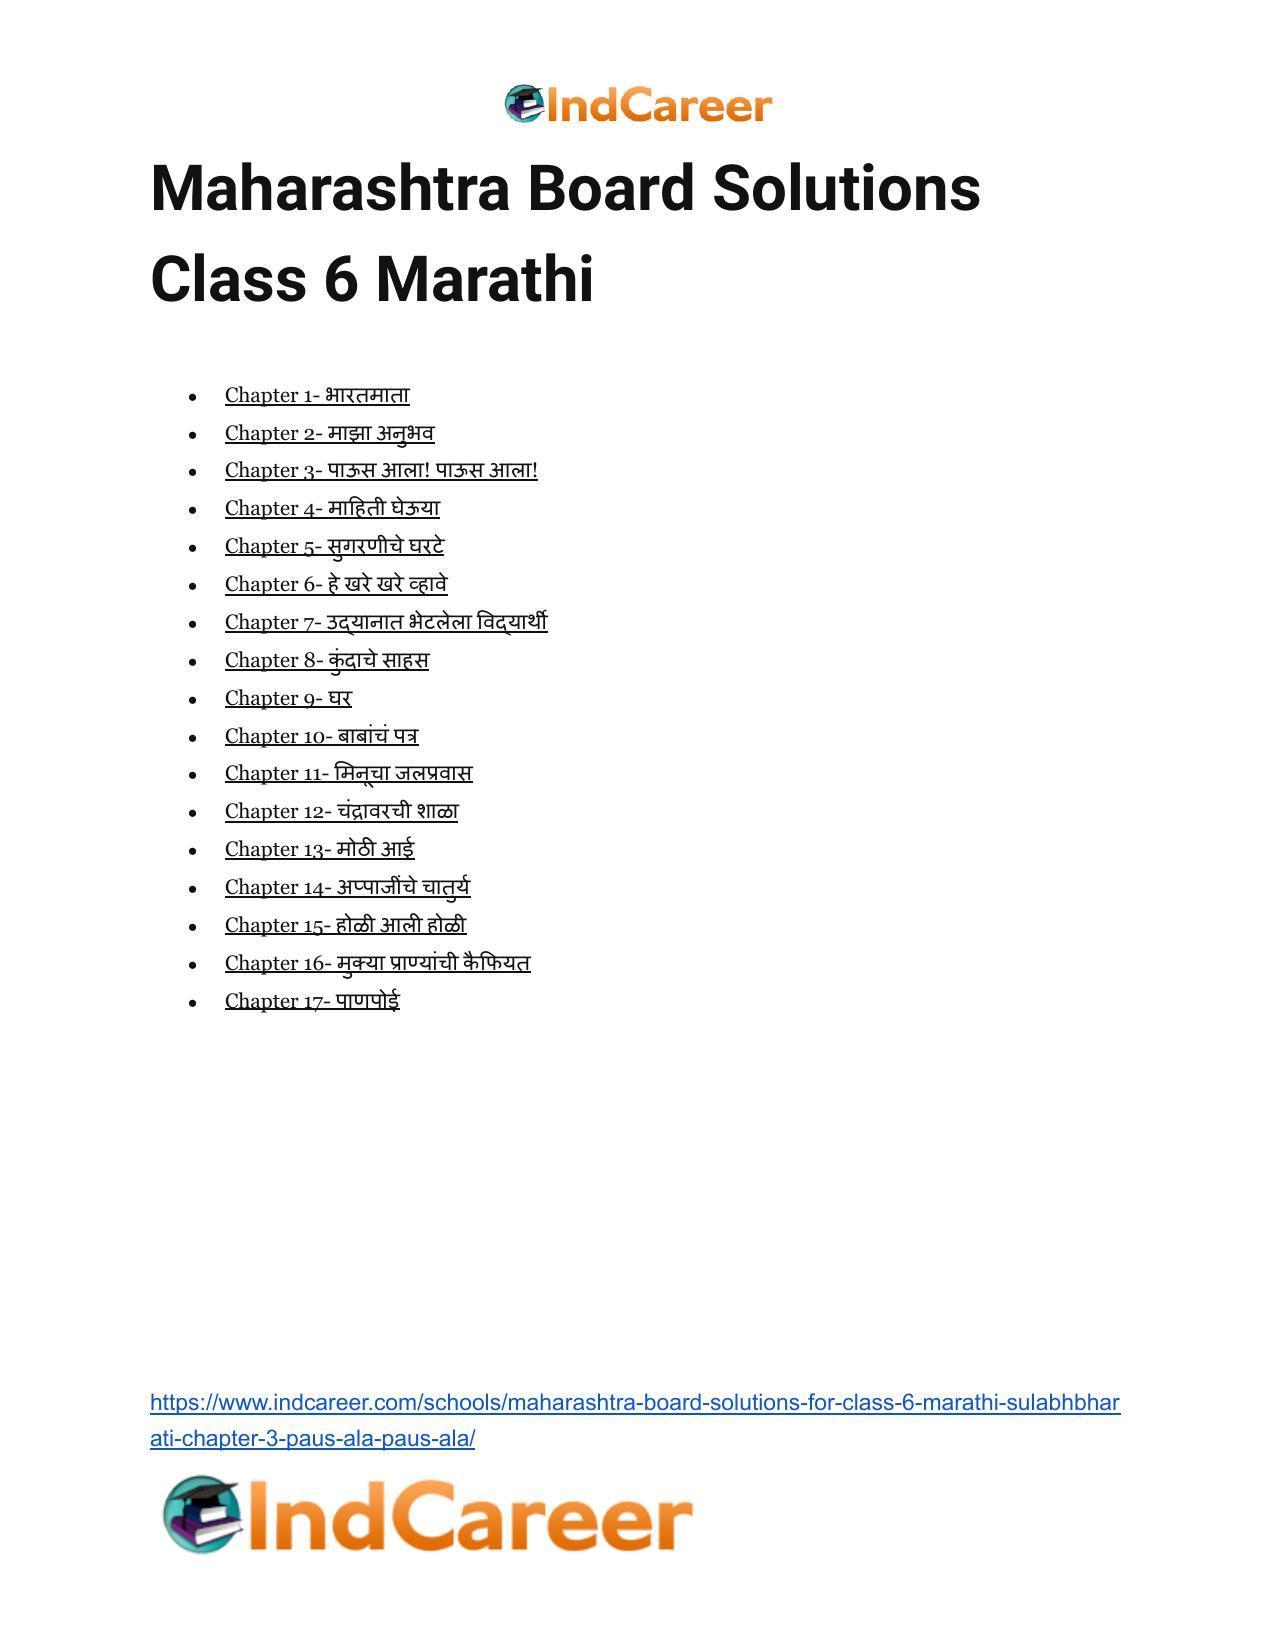 Maharashtra Board Solutions for Class 6- Marathi Sulabhbharati: Chapter 3- पाऊस आला! पाऊस आला! - Page 14